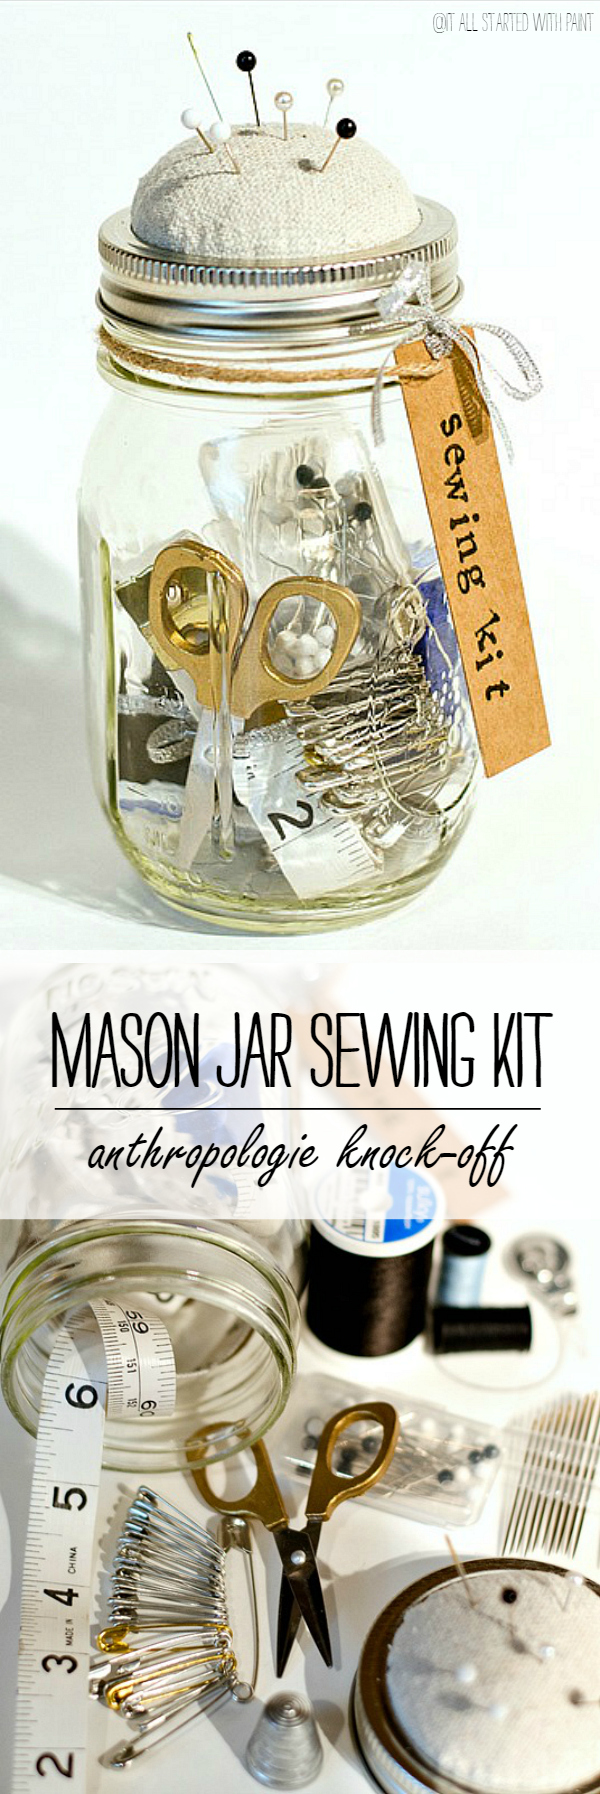 Anthropologie Mason Jar Sewing Kit Craft Idea